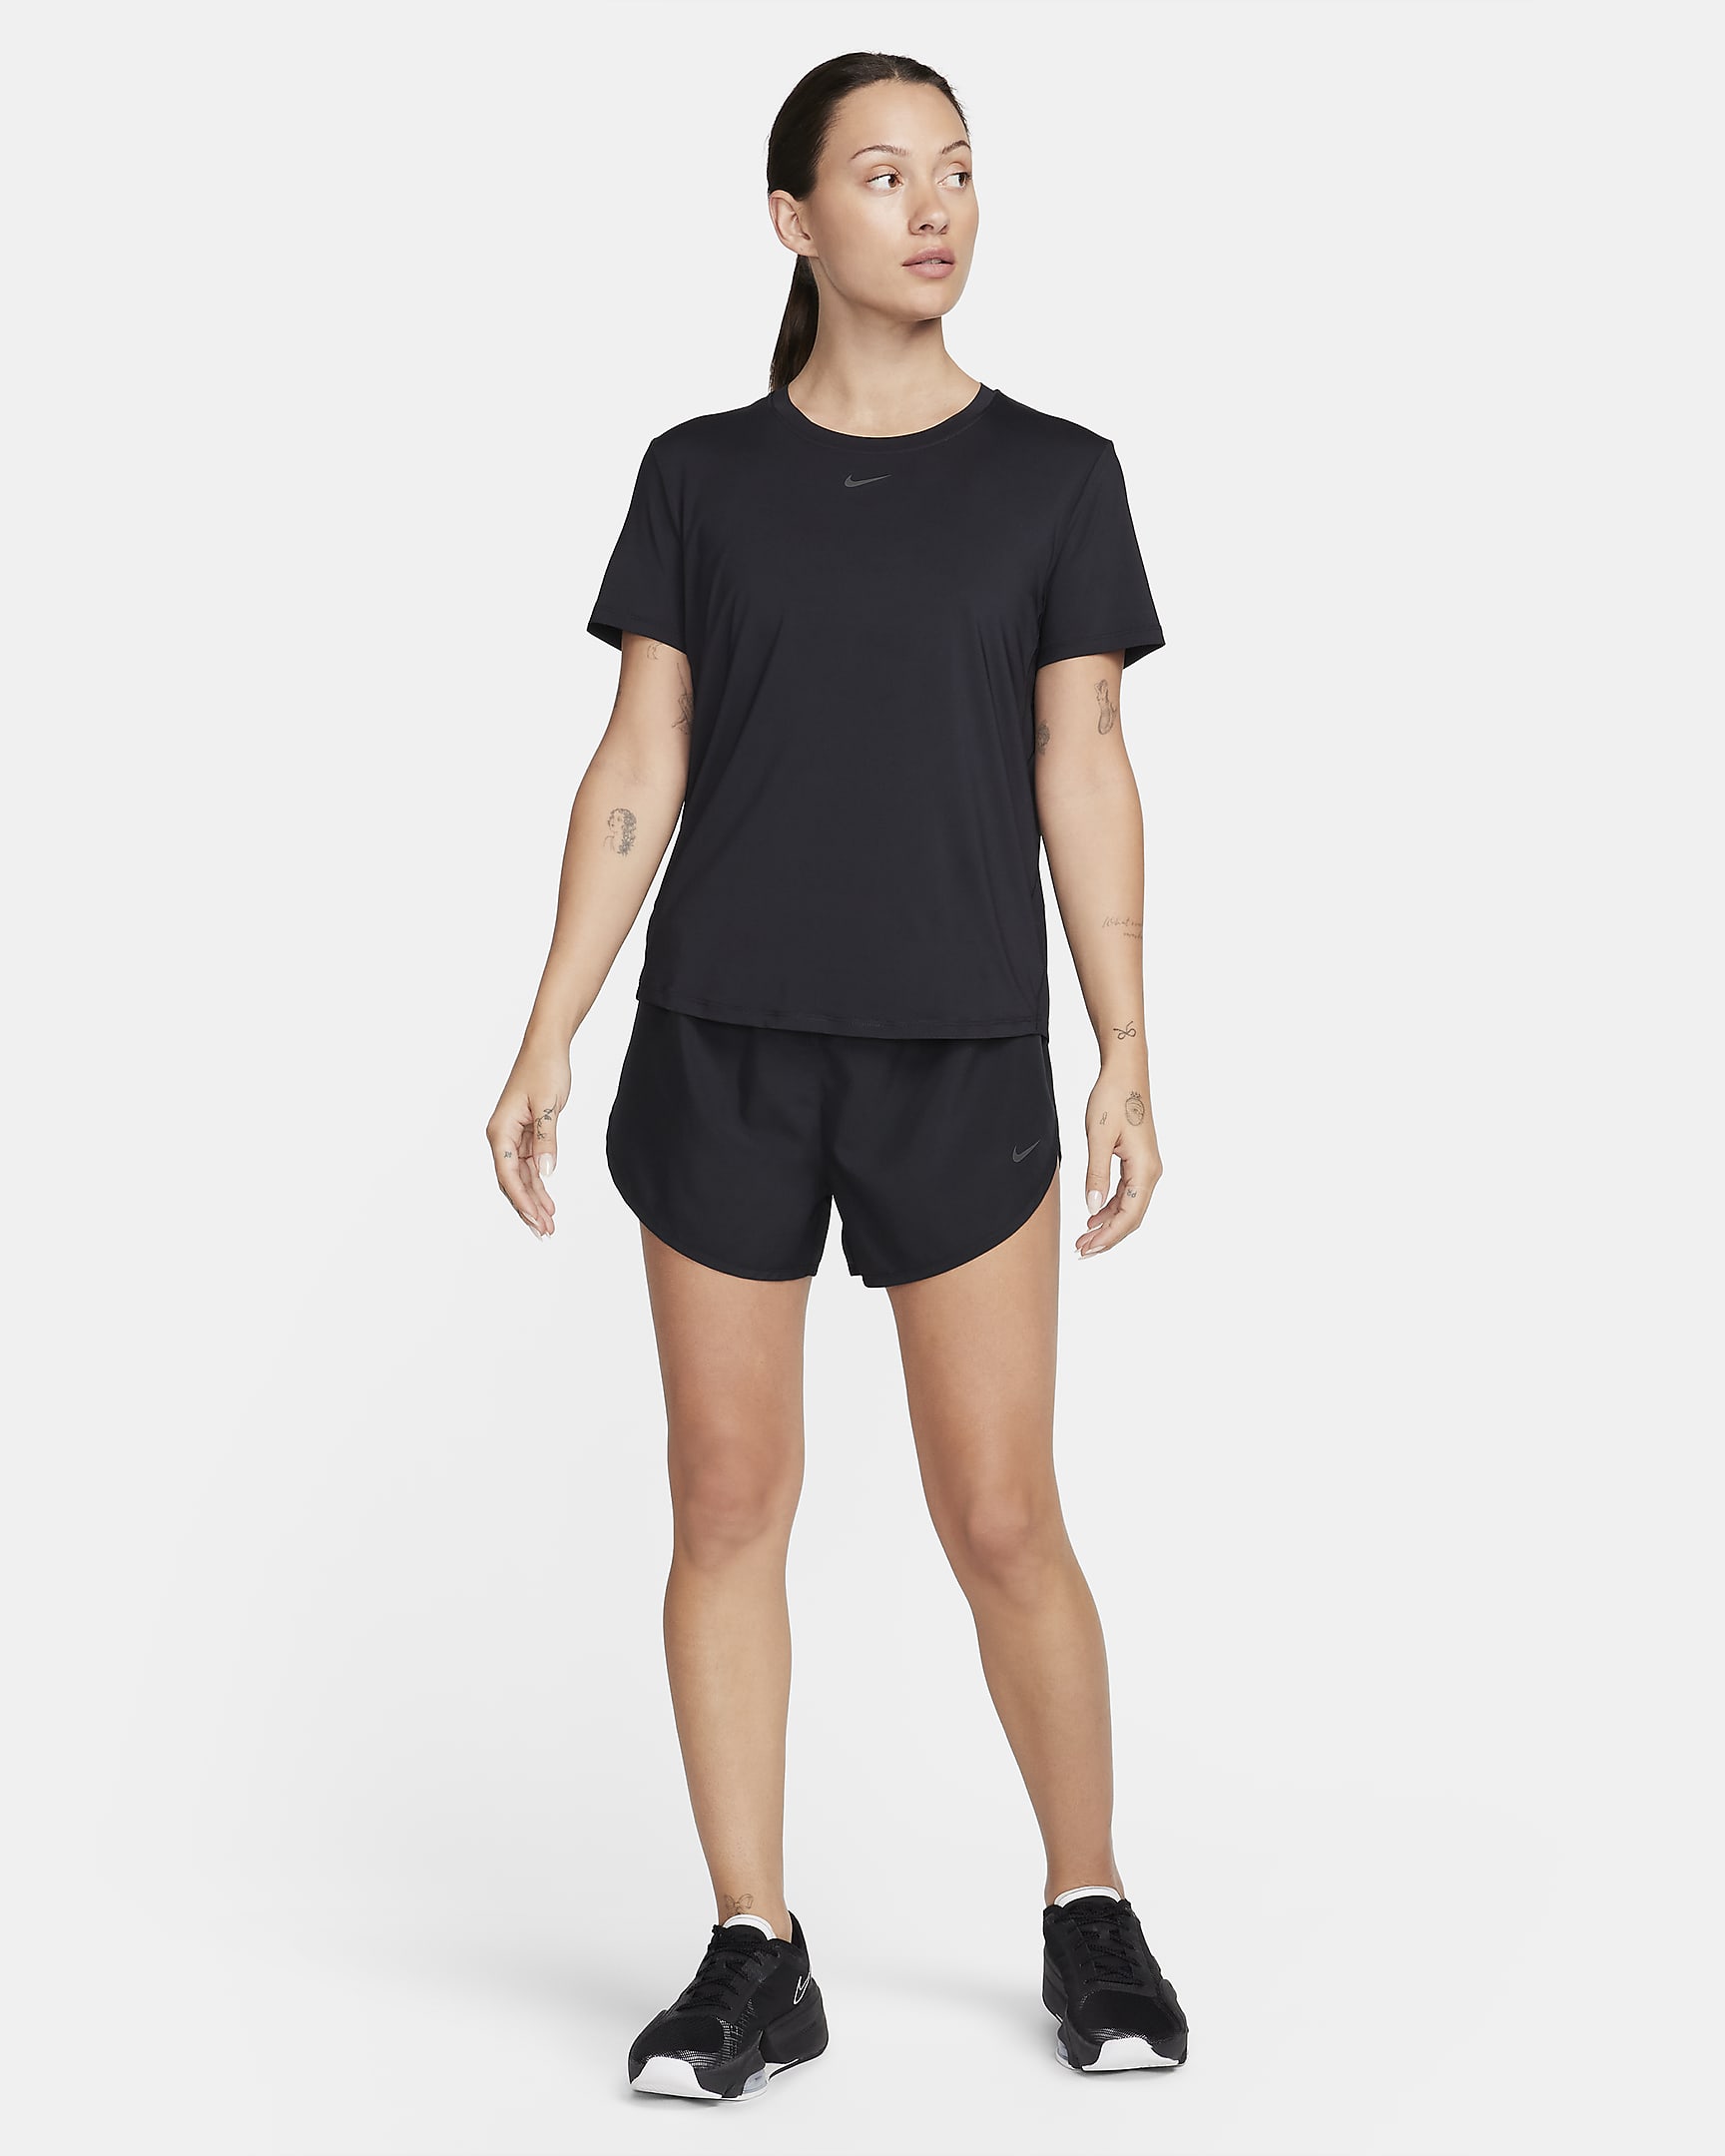 Nike One Classic Women's Dri-FIT Short-Sleeve Top. Nike LU